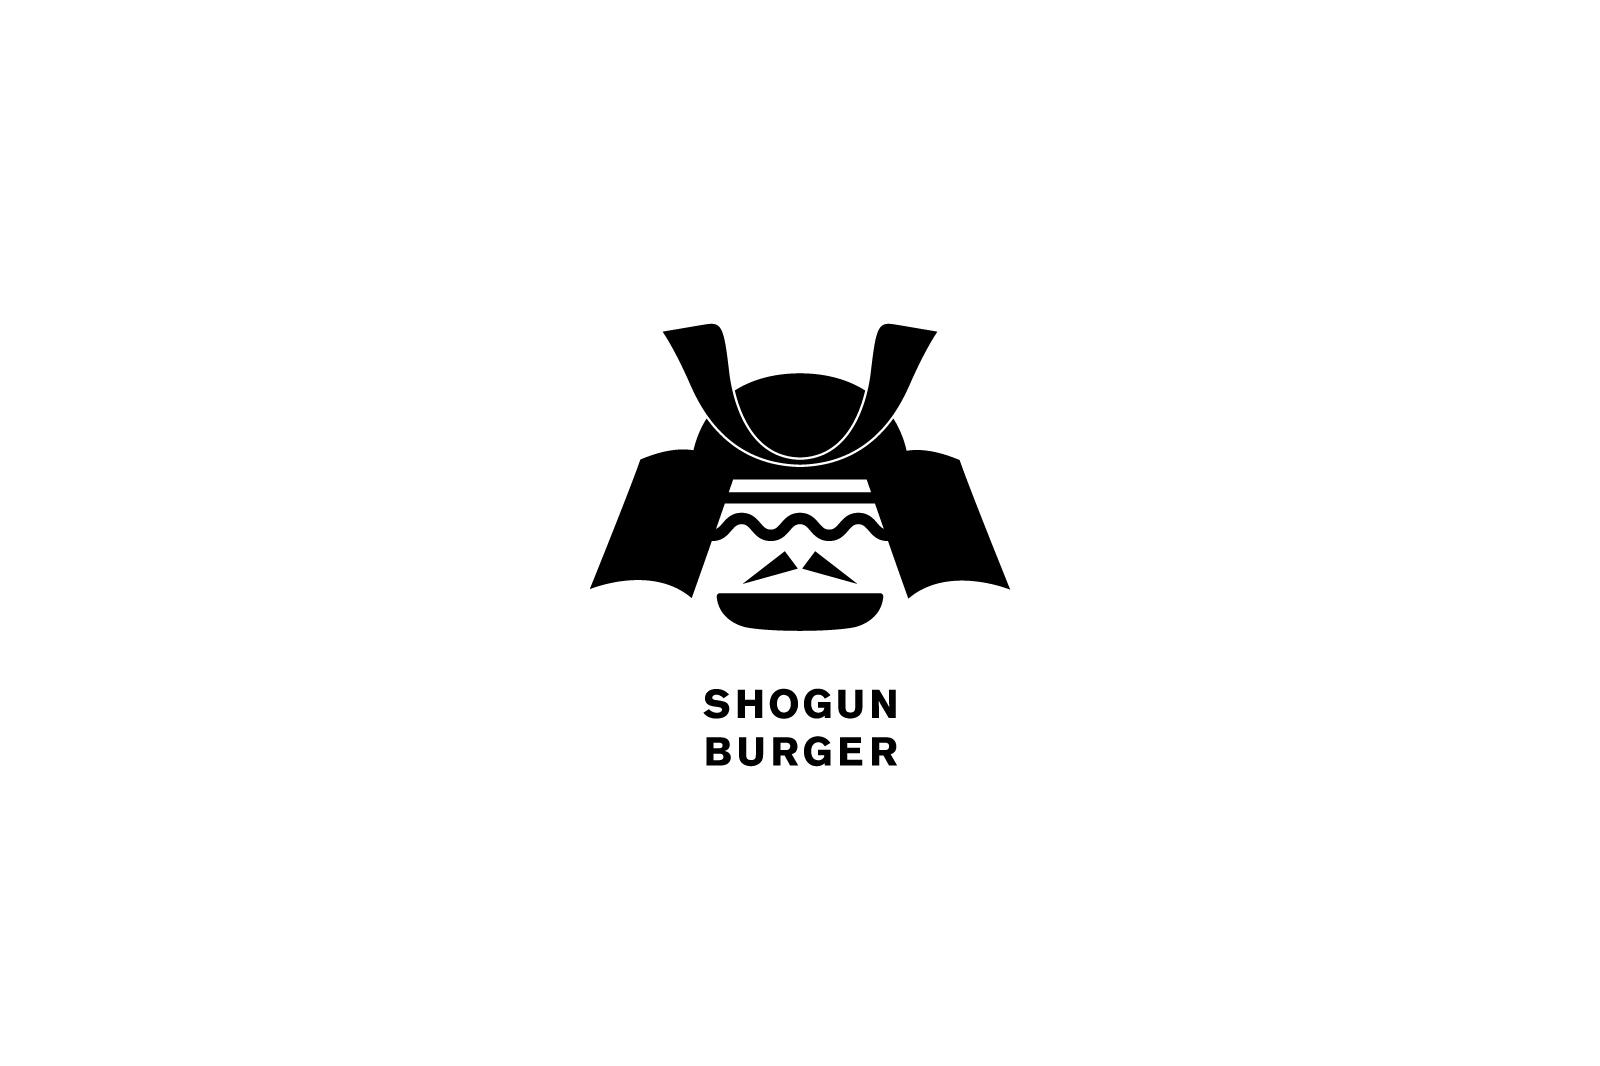 SHOGUN BURGER